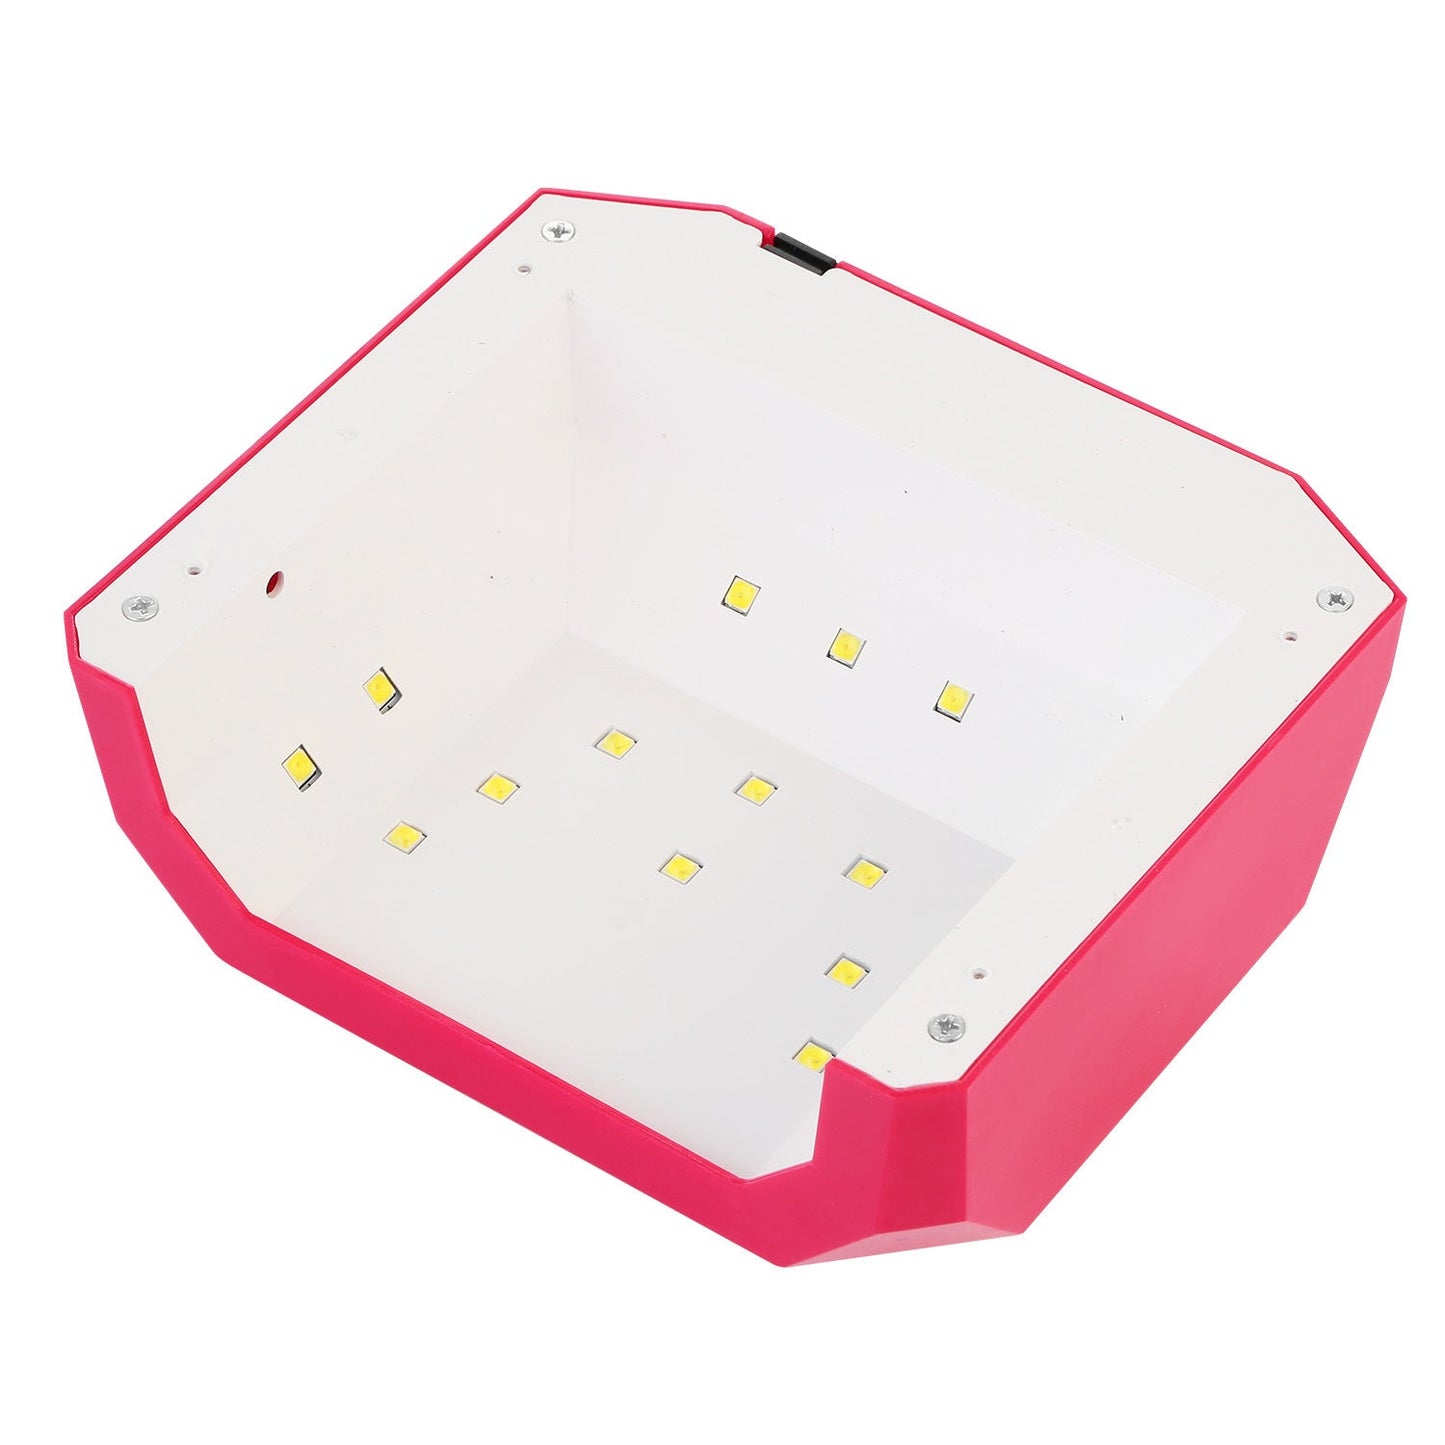 36W UV LED Lamp Nail Polish Dryer 15 LEDs Fingernail Toenail Gel